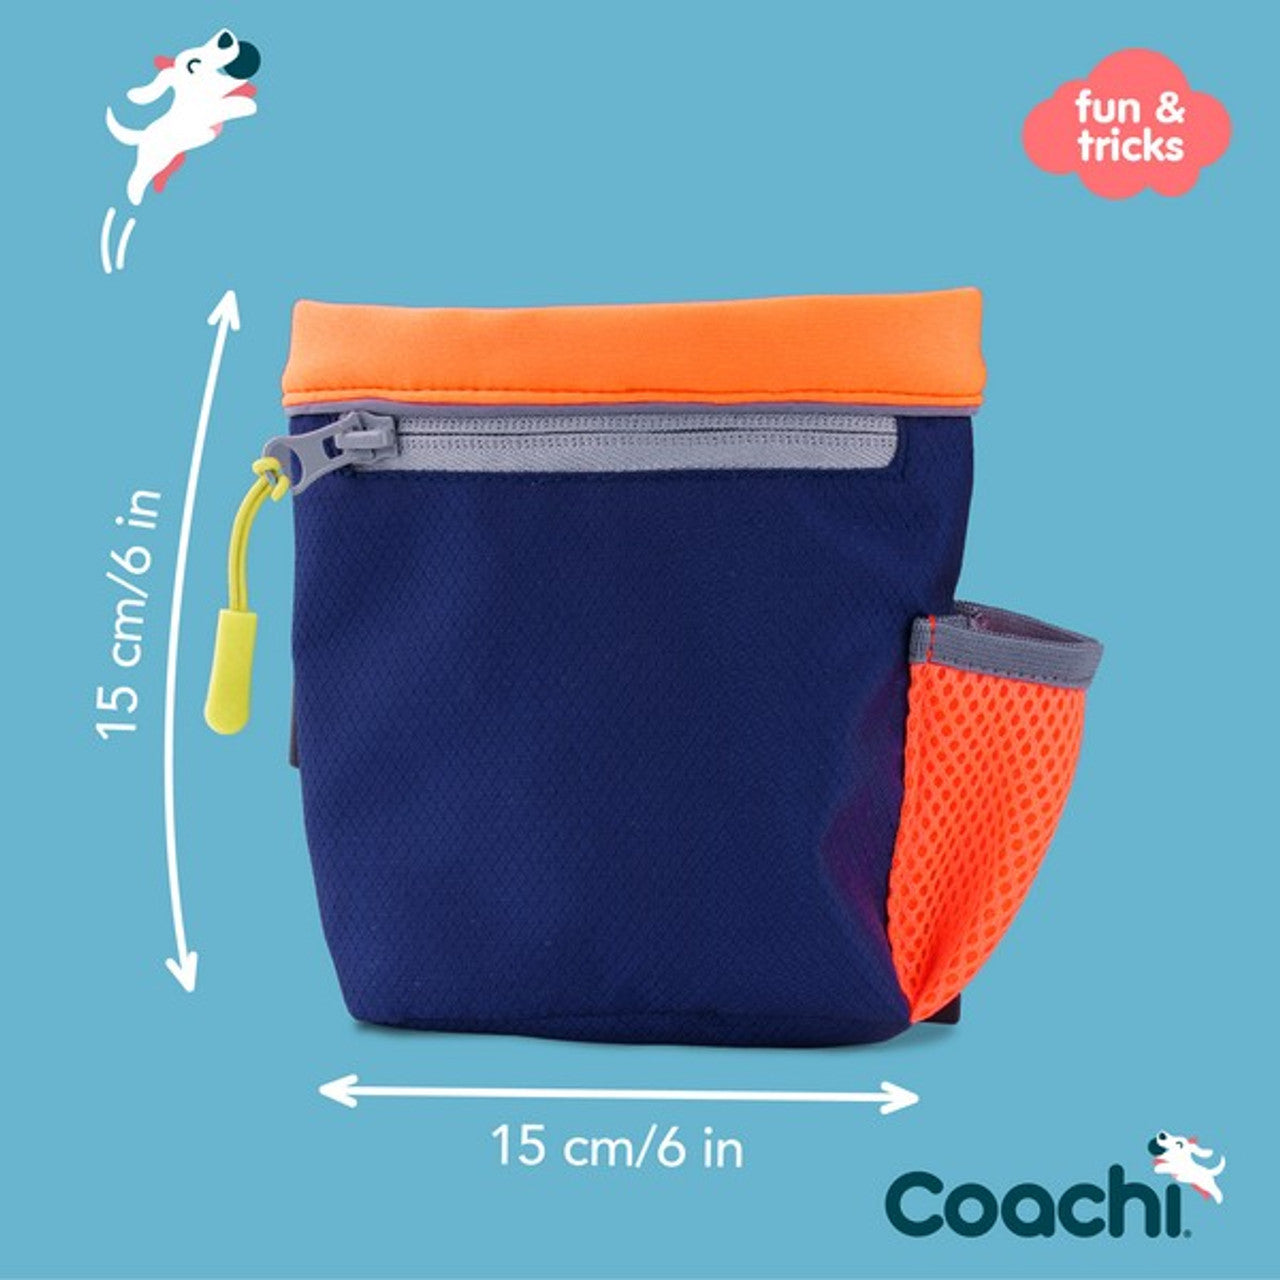 Company of Animals Coachi Train & Treat Bag